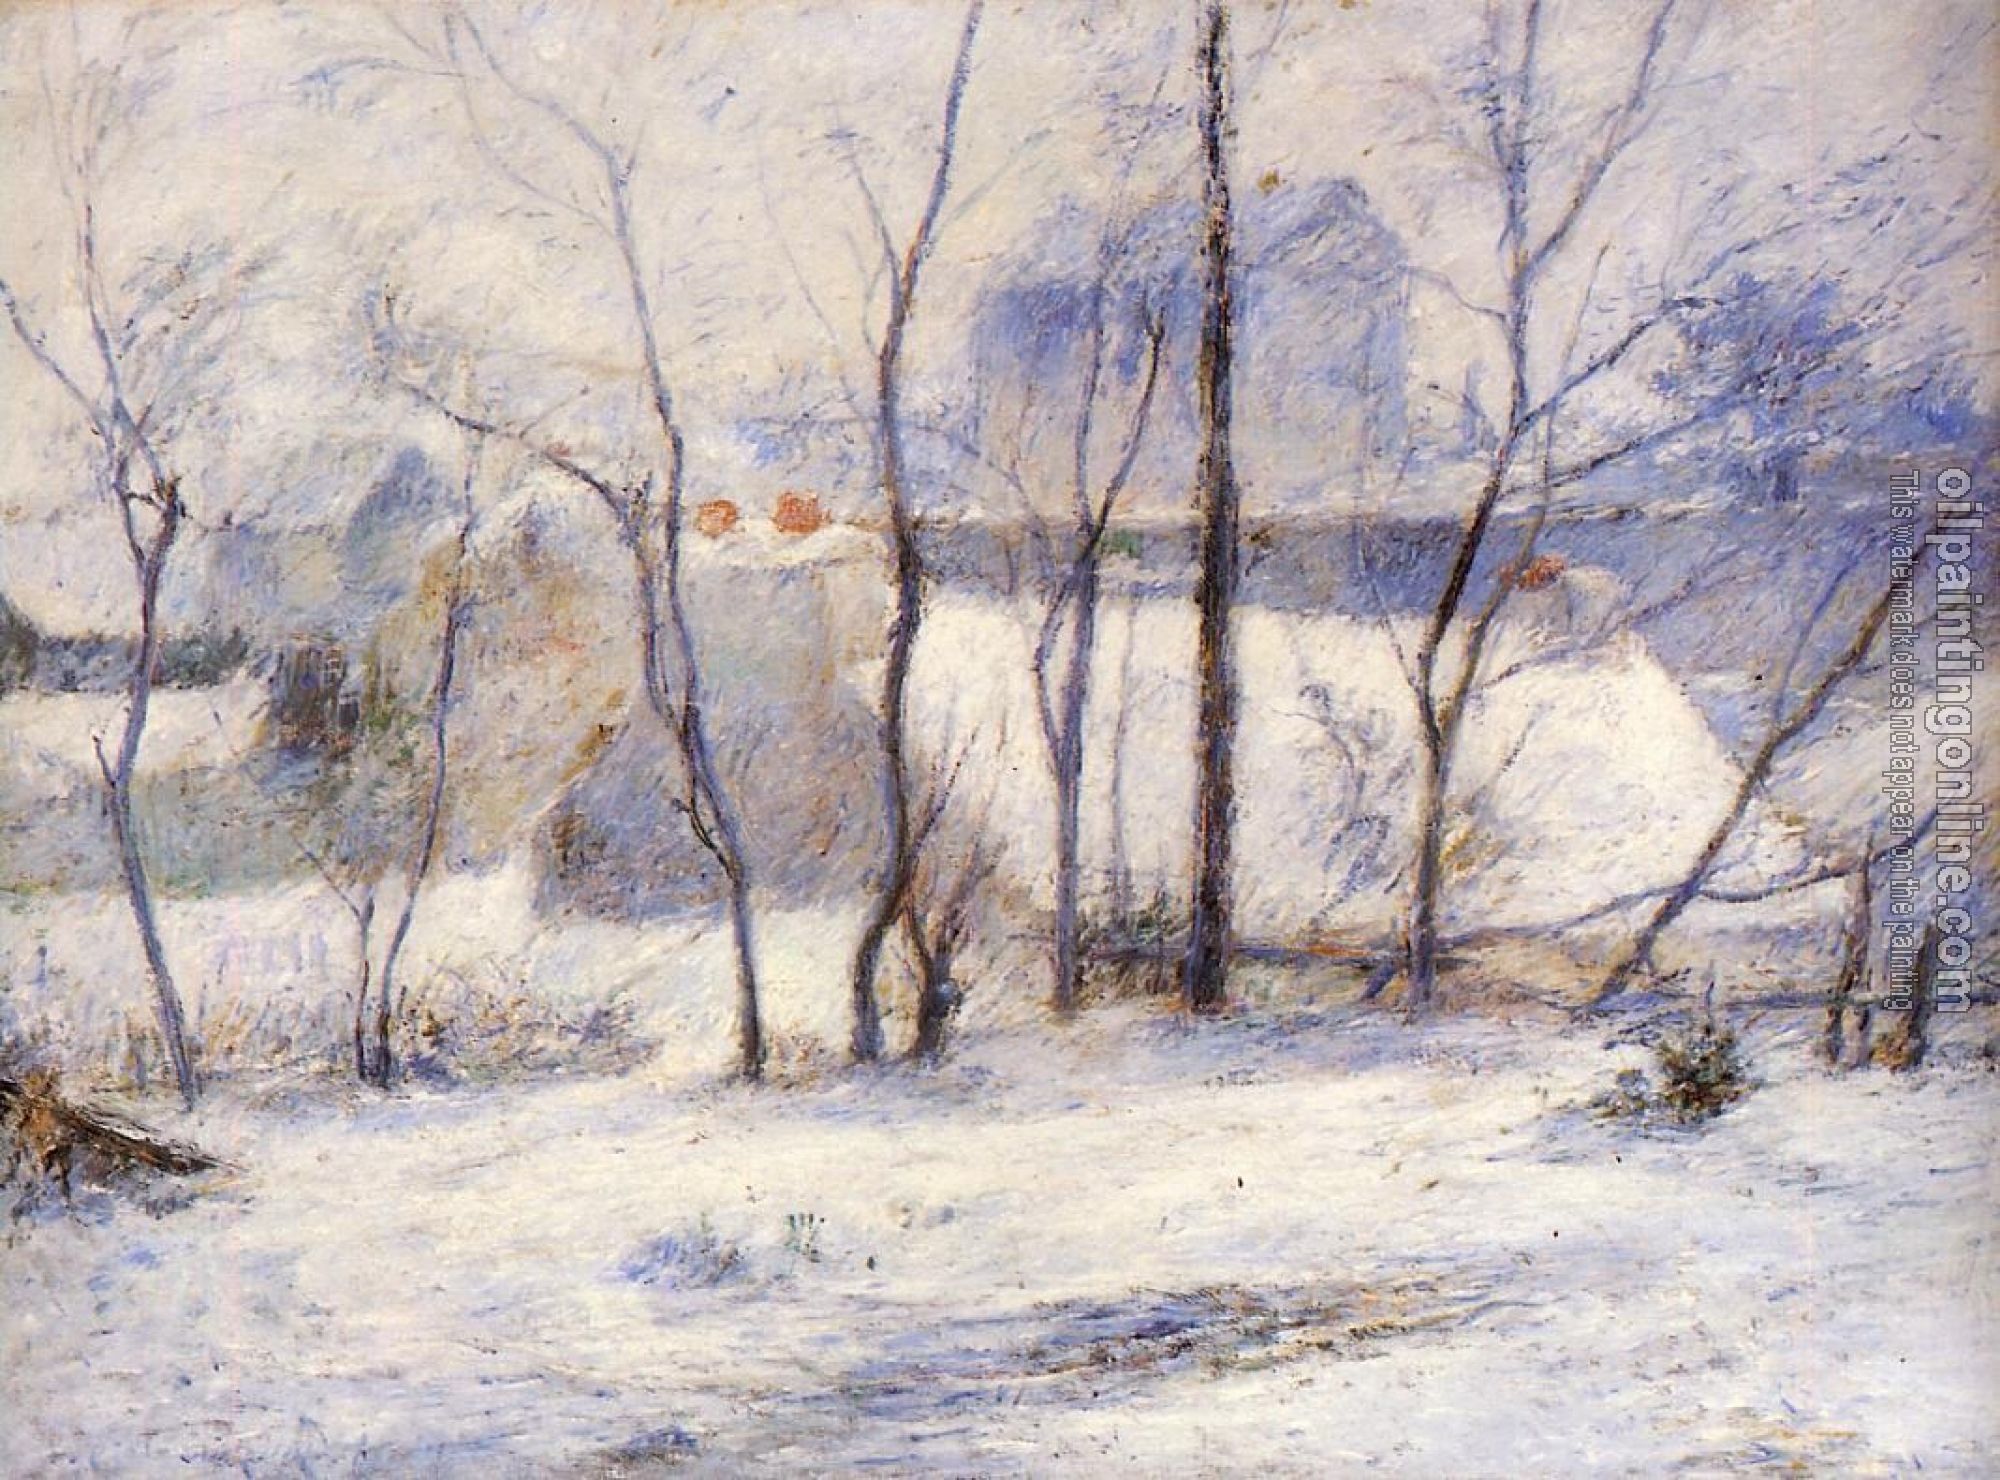 Gauguin, Paul - Winter Landscape, Effect of Snow